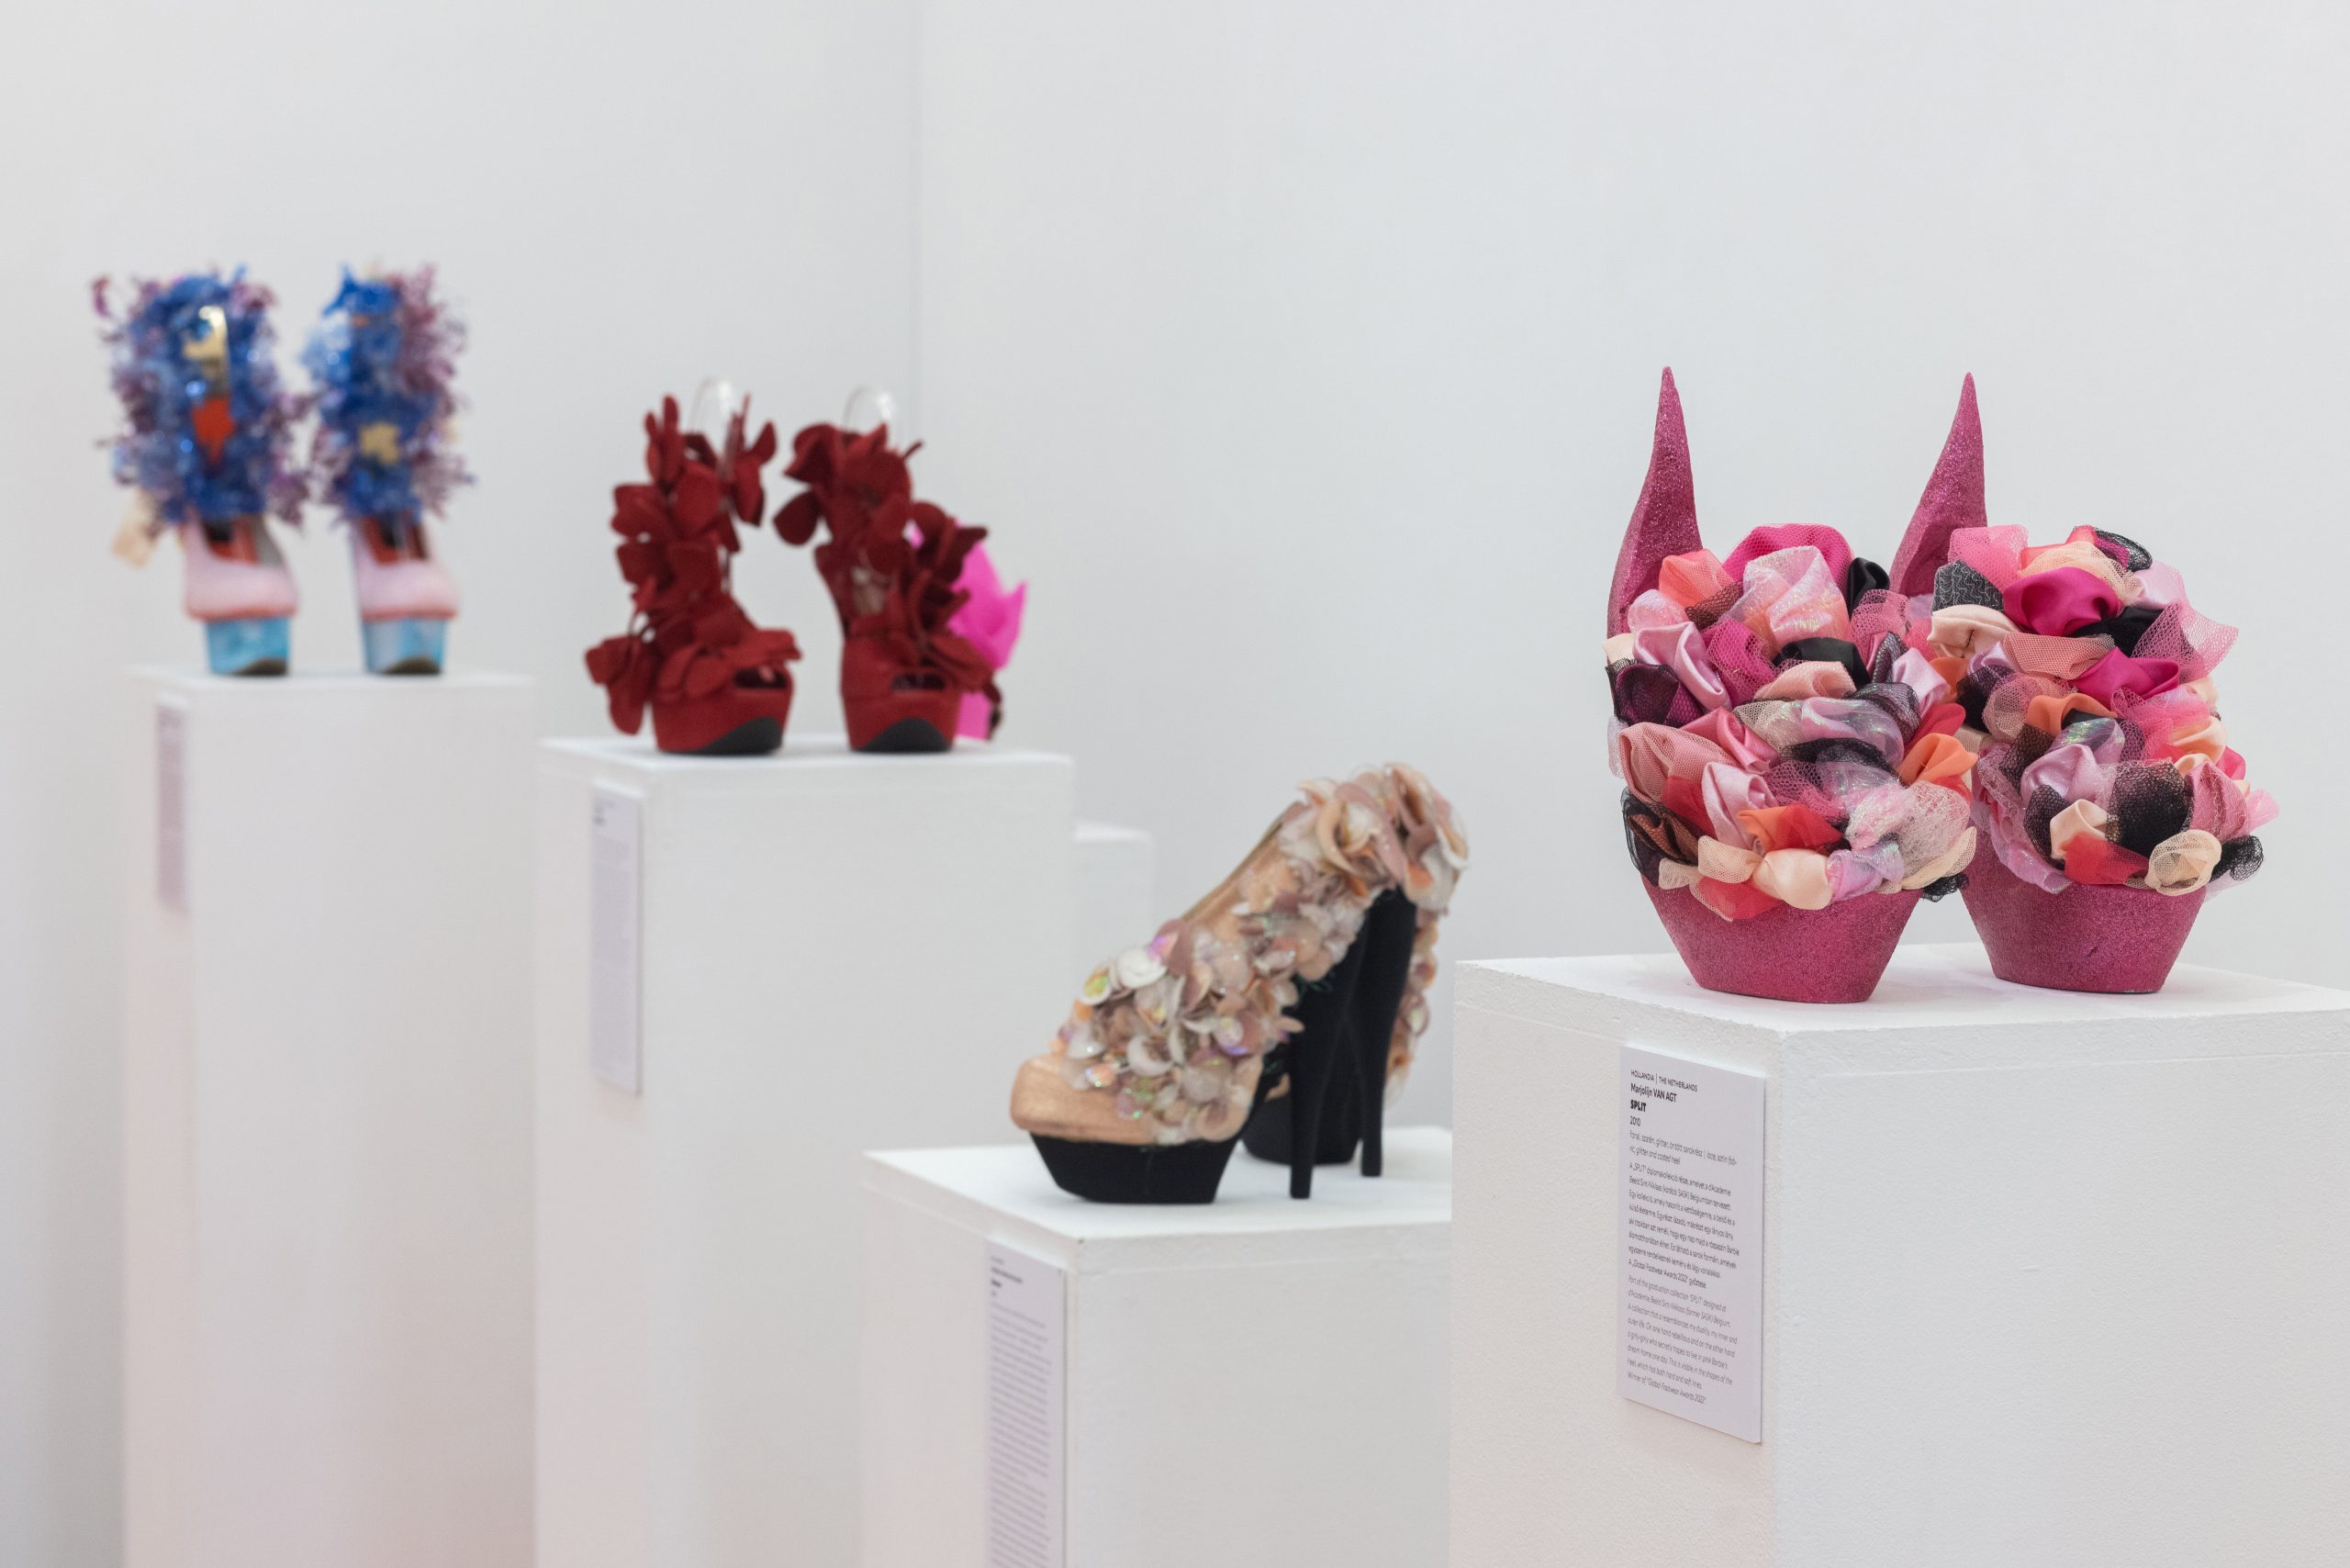 Artistic Footwear Exhibition Opens in Pécs